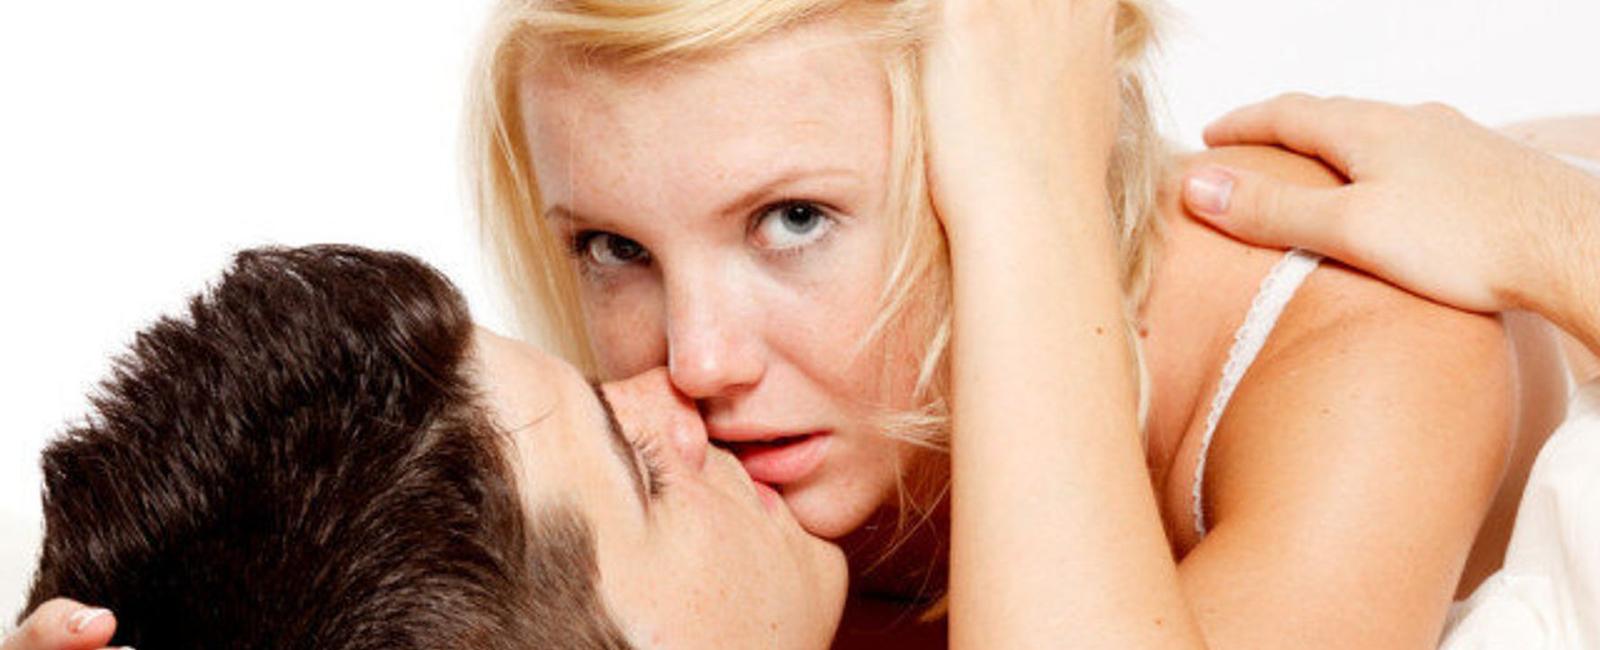 The female orgasm lasts three times longer the male orgasm